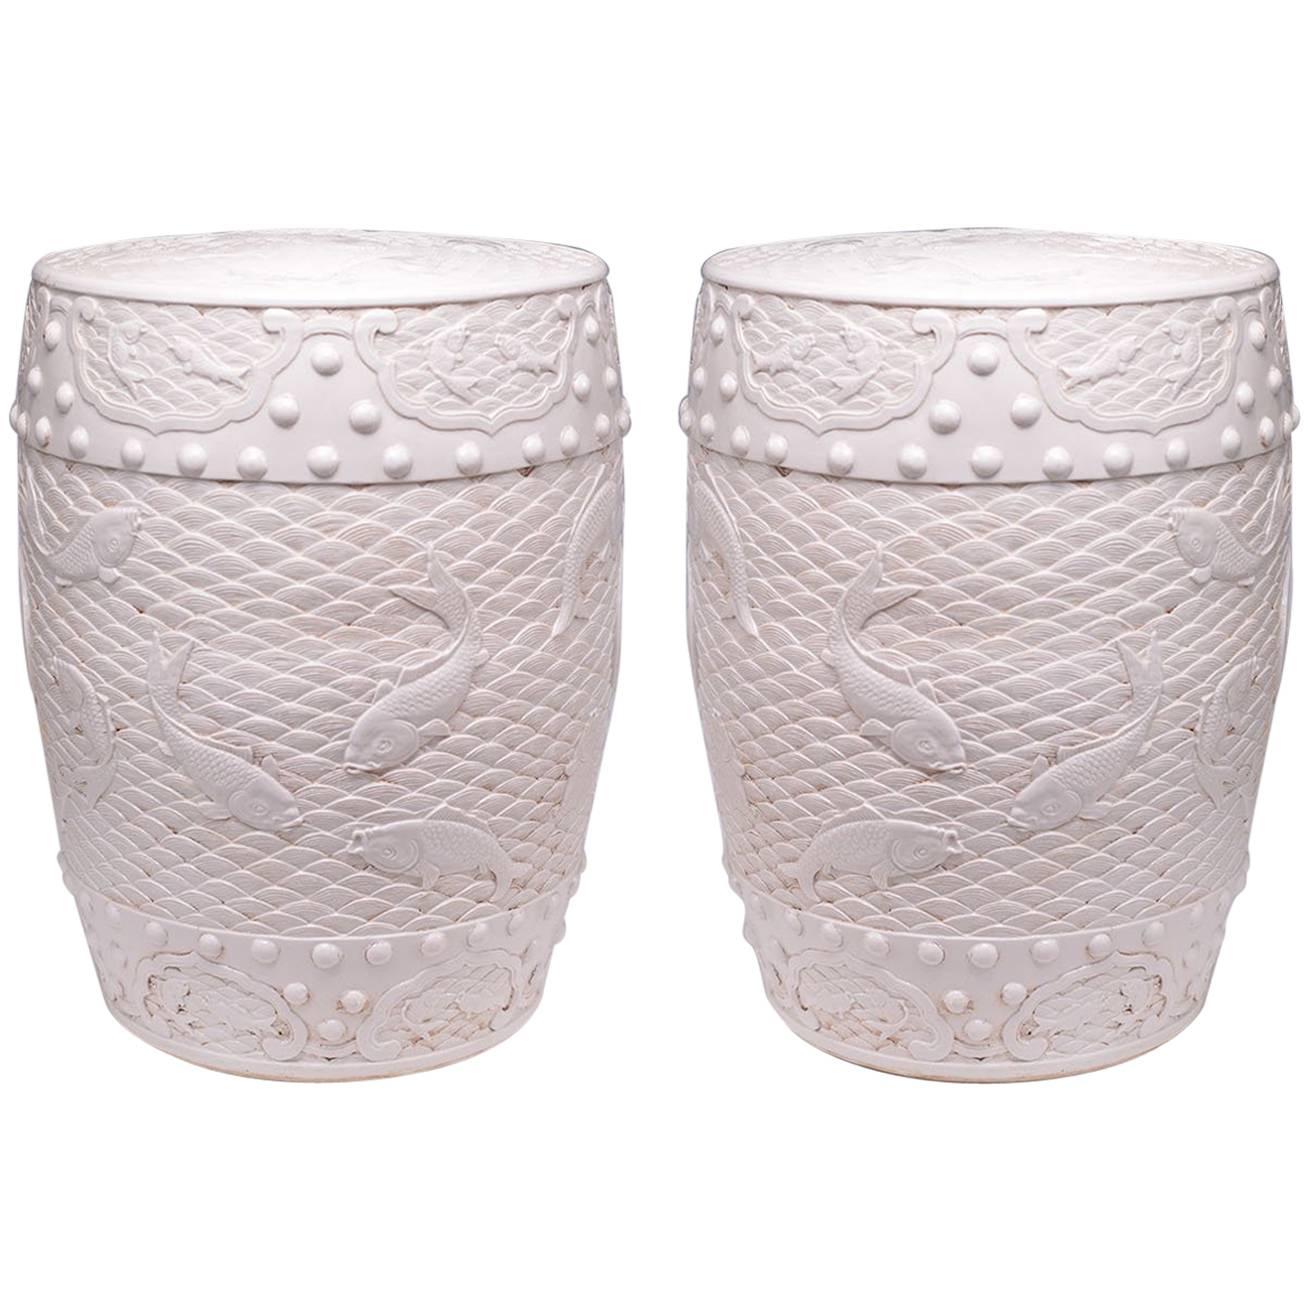 Pair of Fine Carved Blanc-de-chine Porcelain Stools